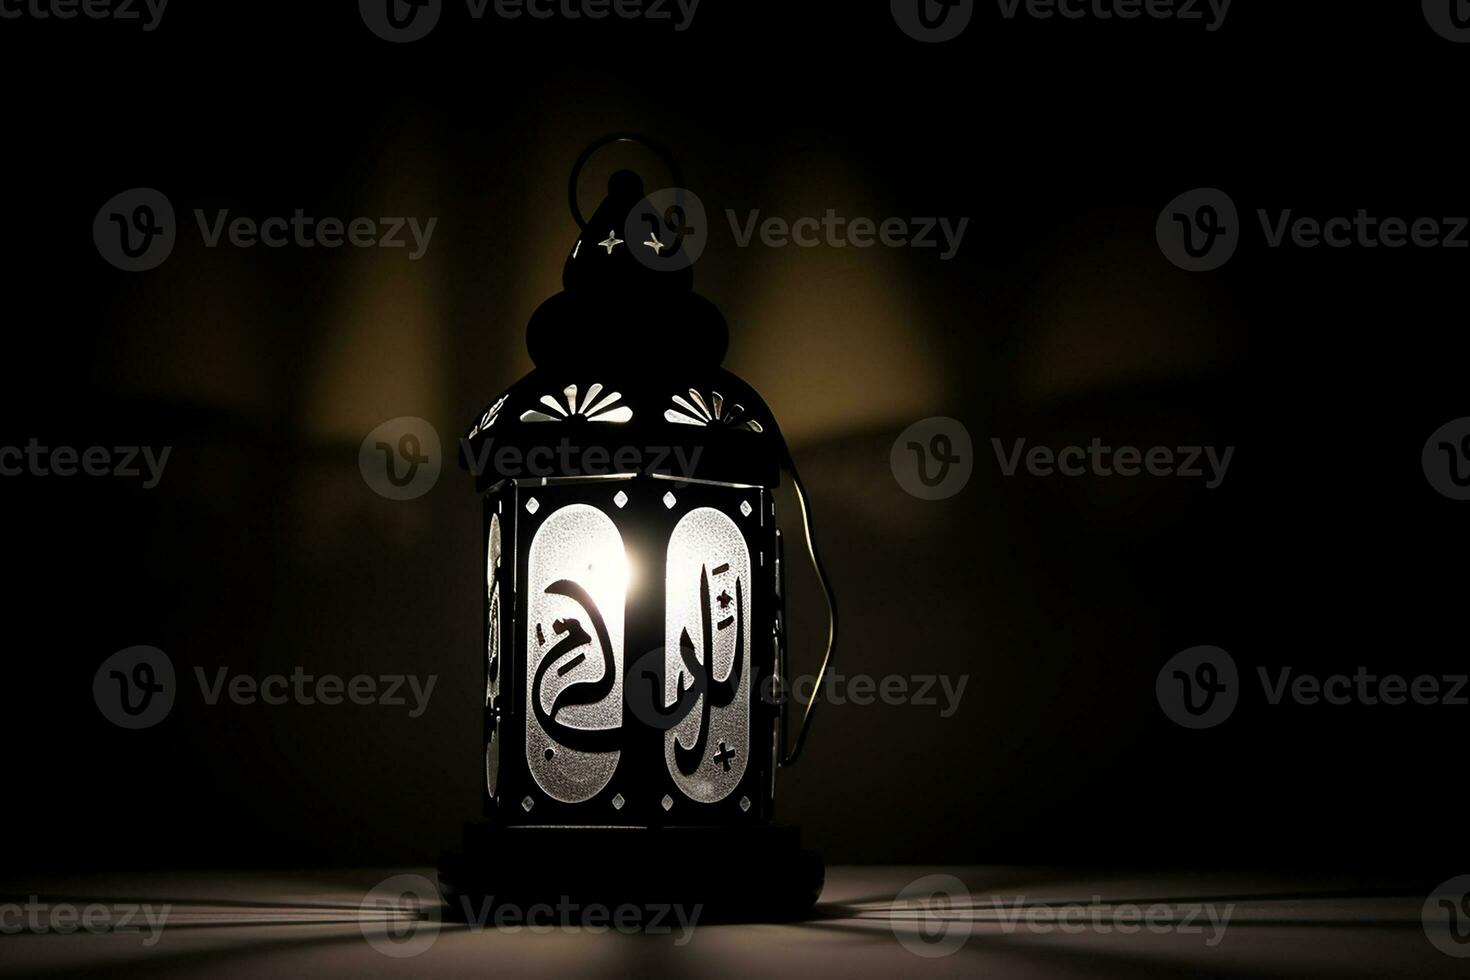 ai gegenereerd sier- Arabisch lantaarn gloeiend voor moslim heilig maand Ramadan kareem foto